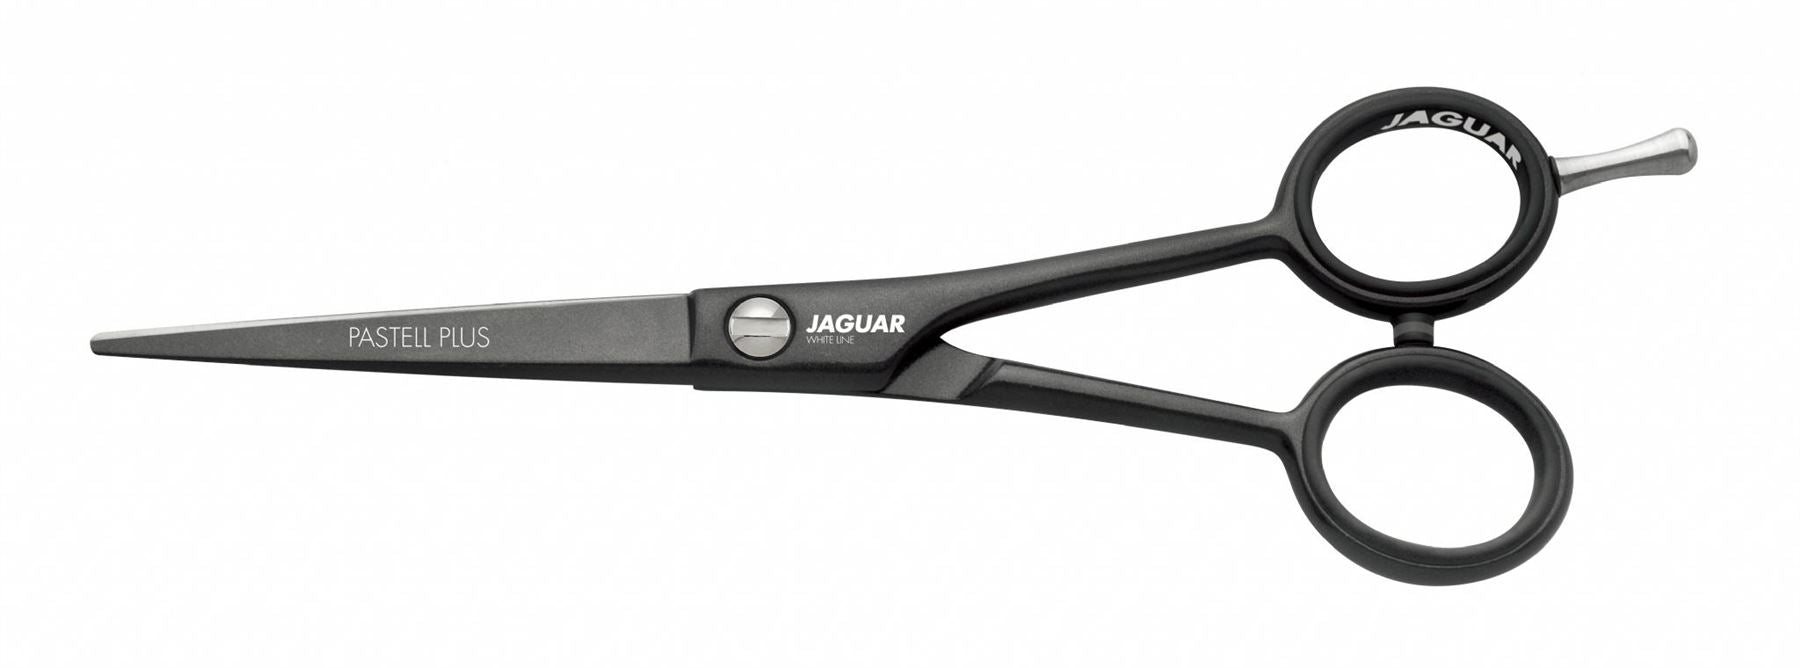 Jaguar Pastell Plus 5.5" Hairdressing Scissors - Lava